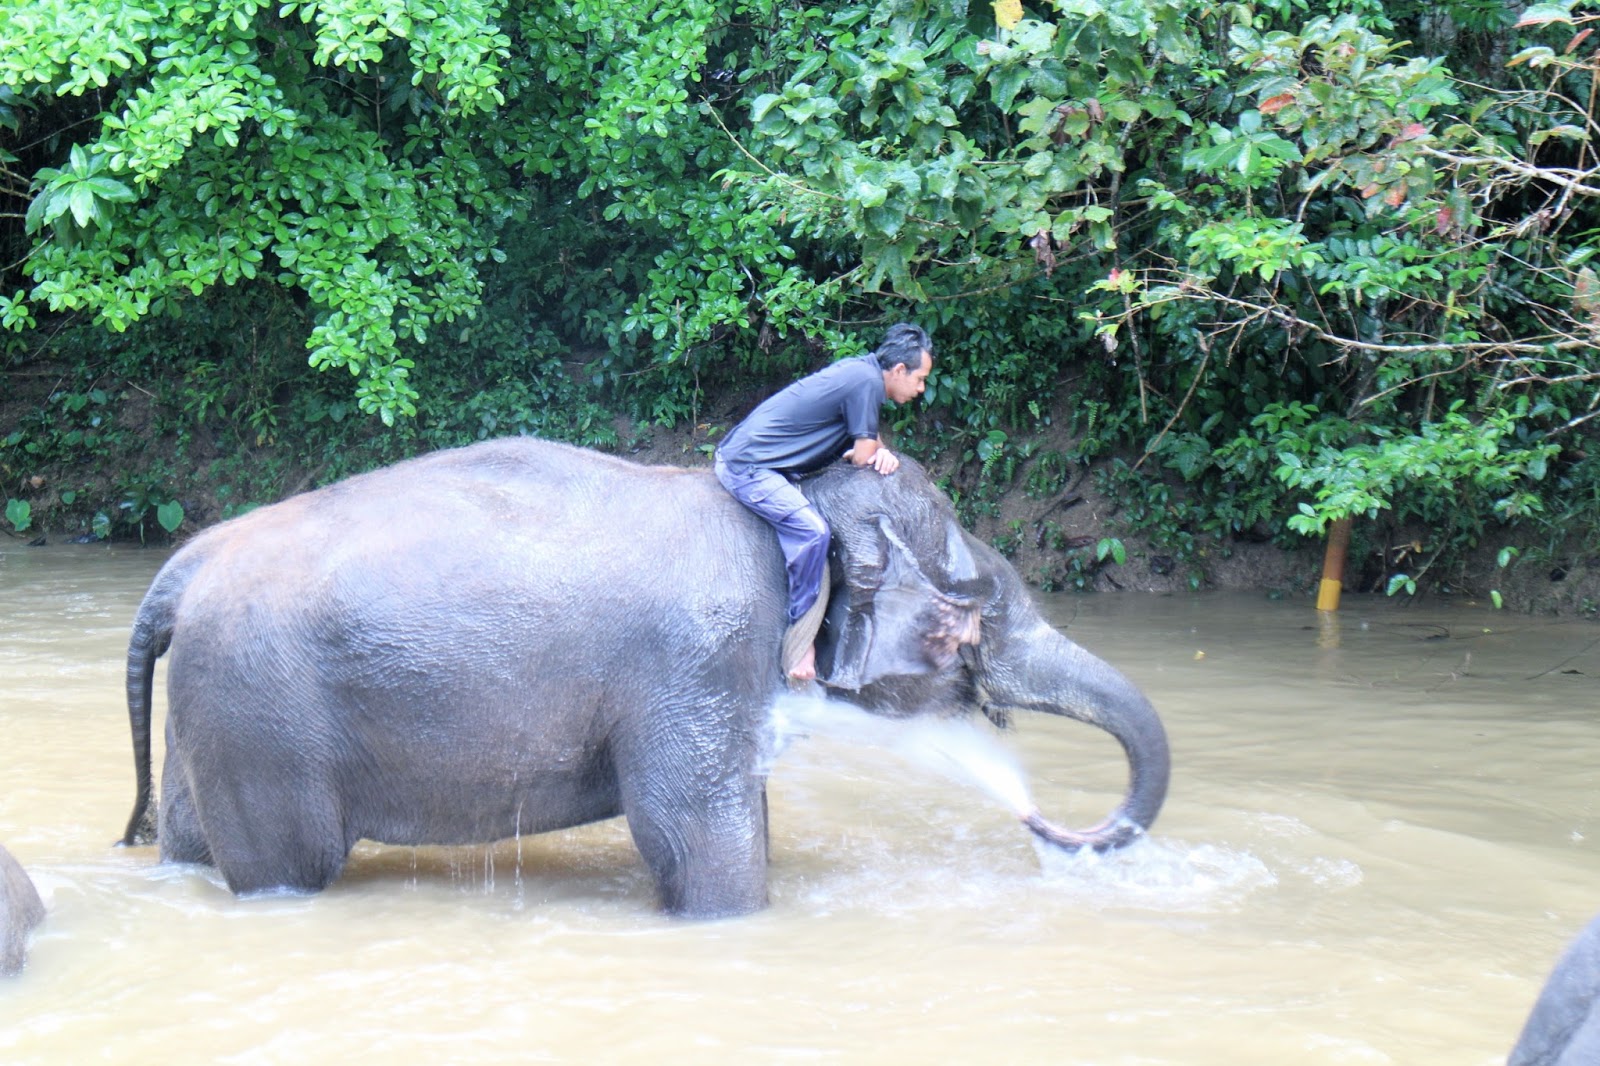 Elephant sanctuary in Malaysia 